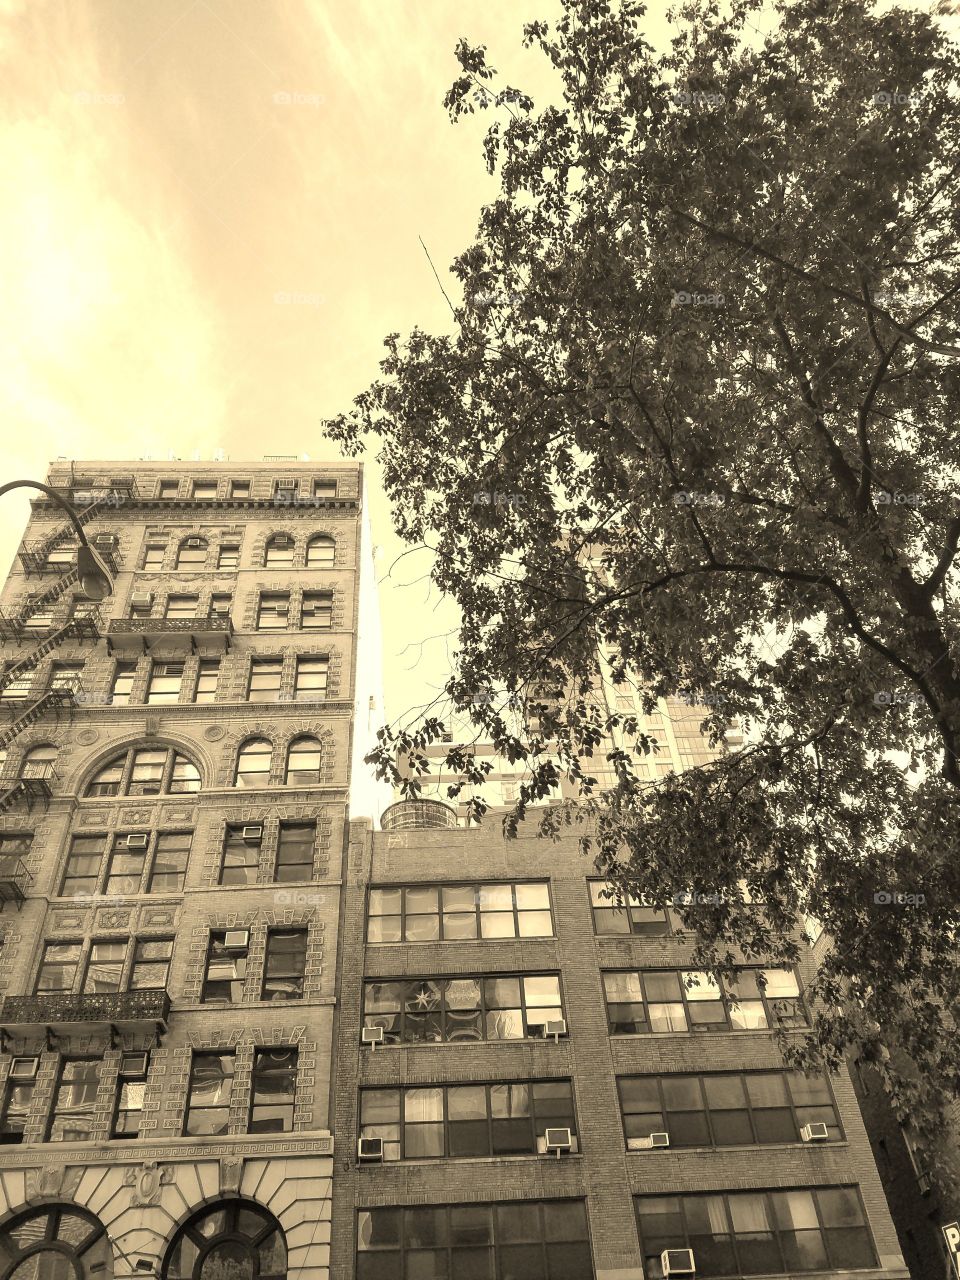 Building in Flatiron on 23rd street - Lower Manhattan. NYC Architecture. Sepia Filter.